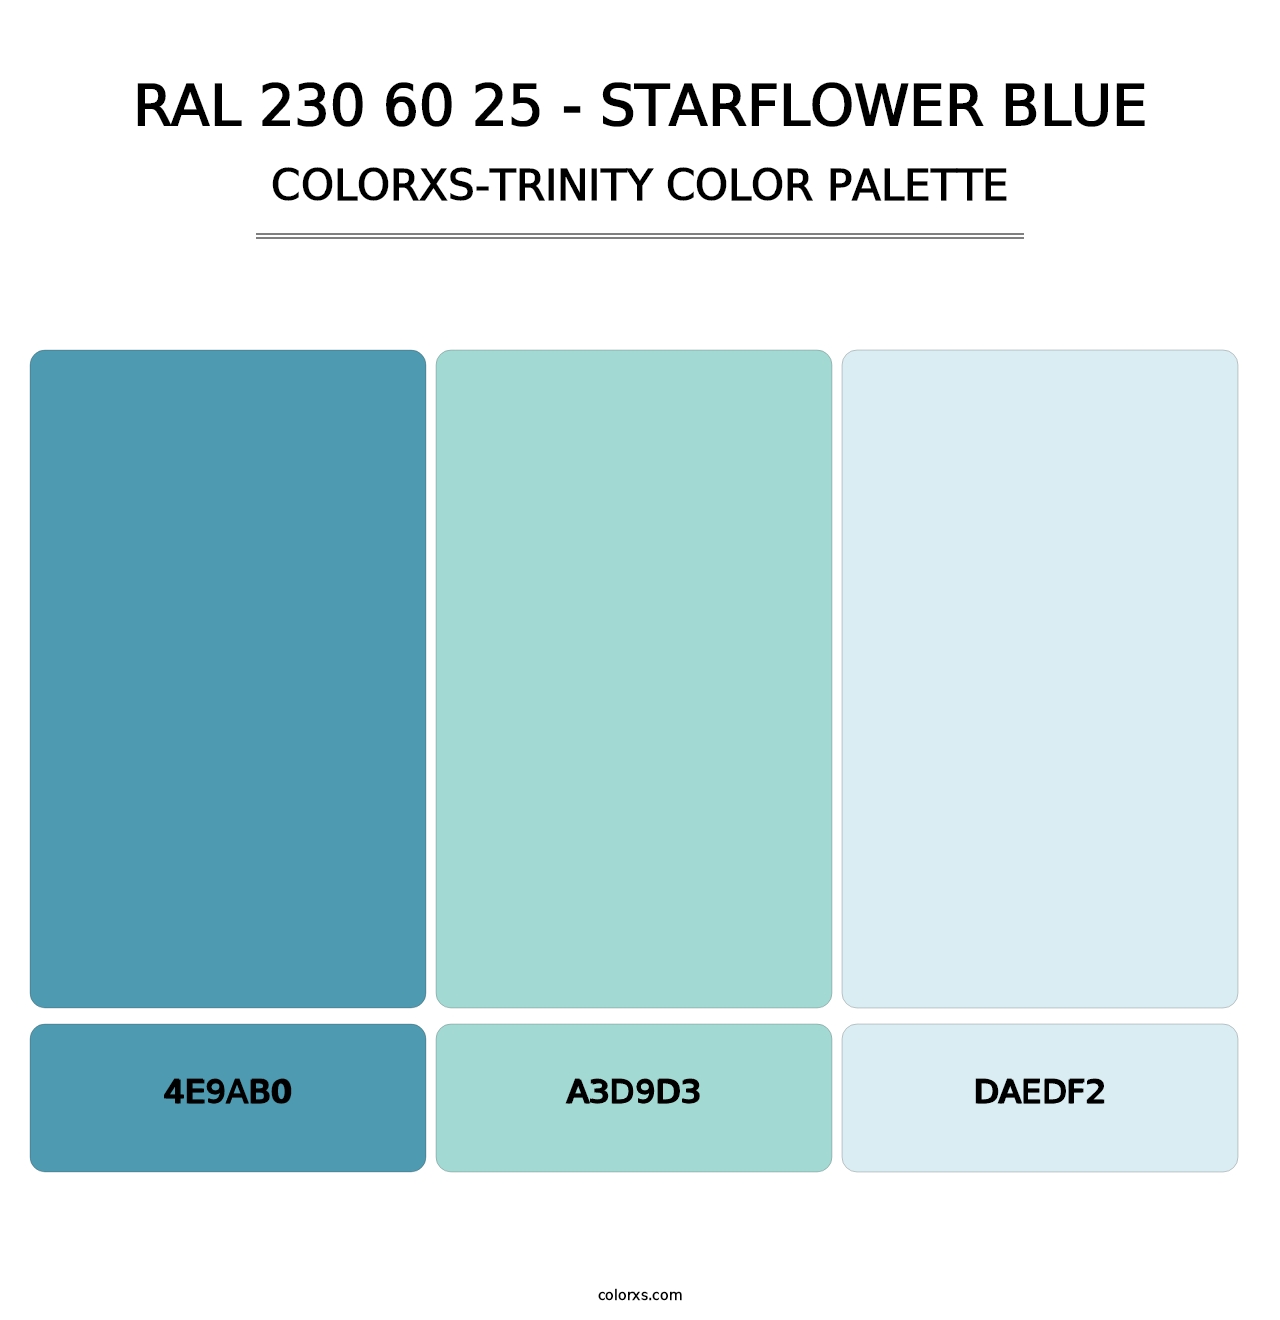 RAL 230 60 25 - Starflower Blue - Colorxs Trinity Palette